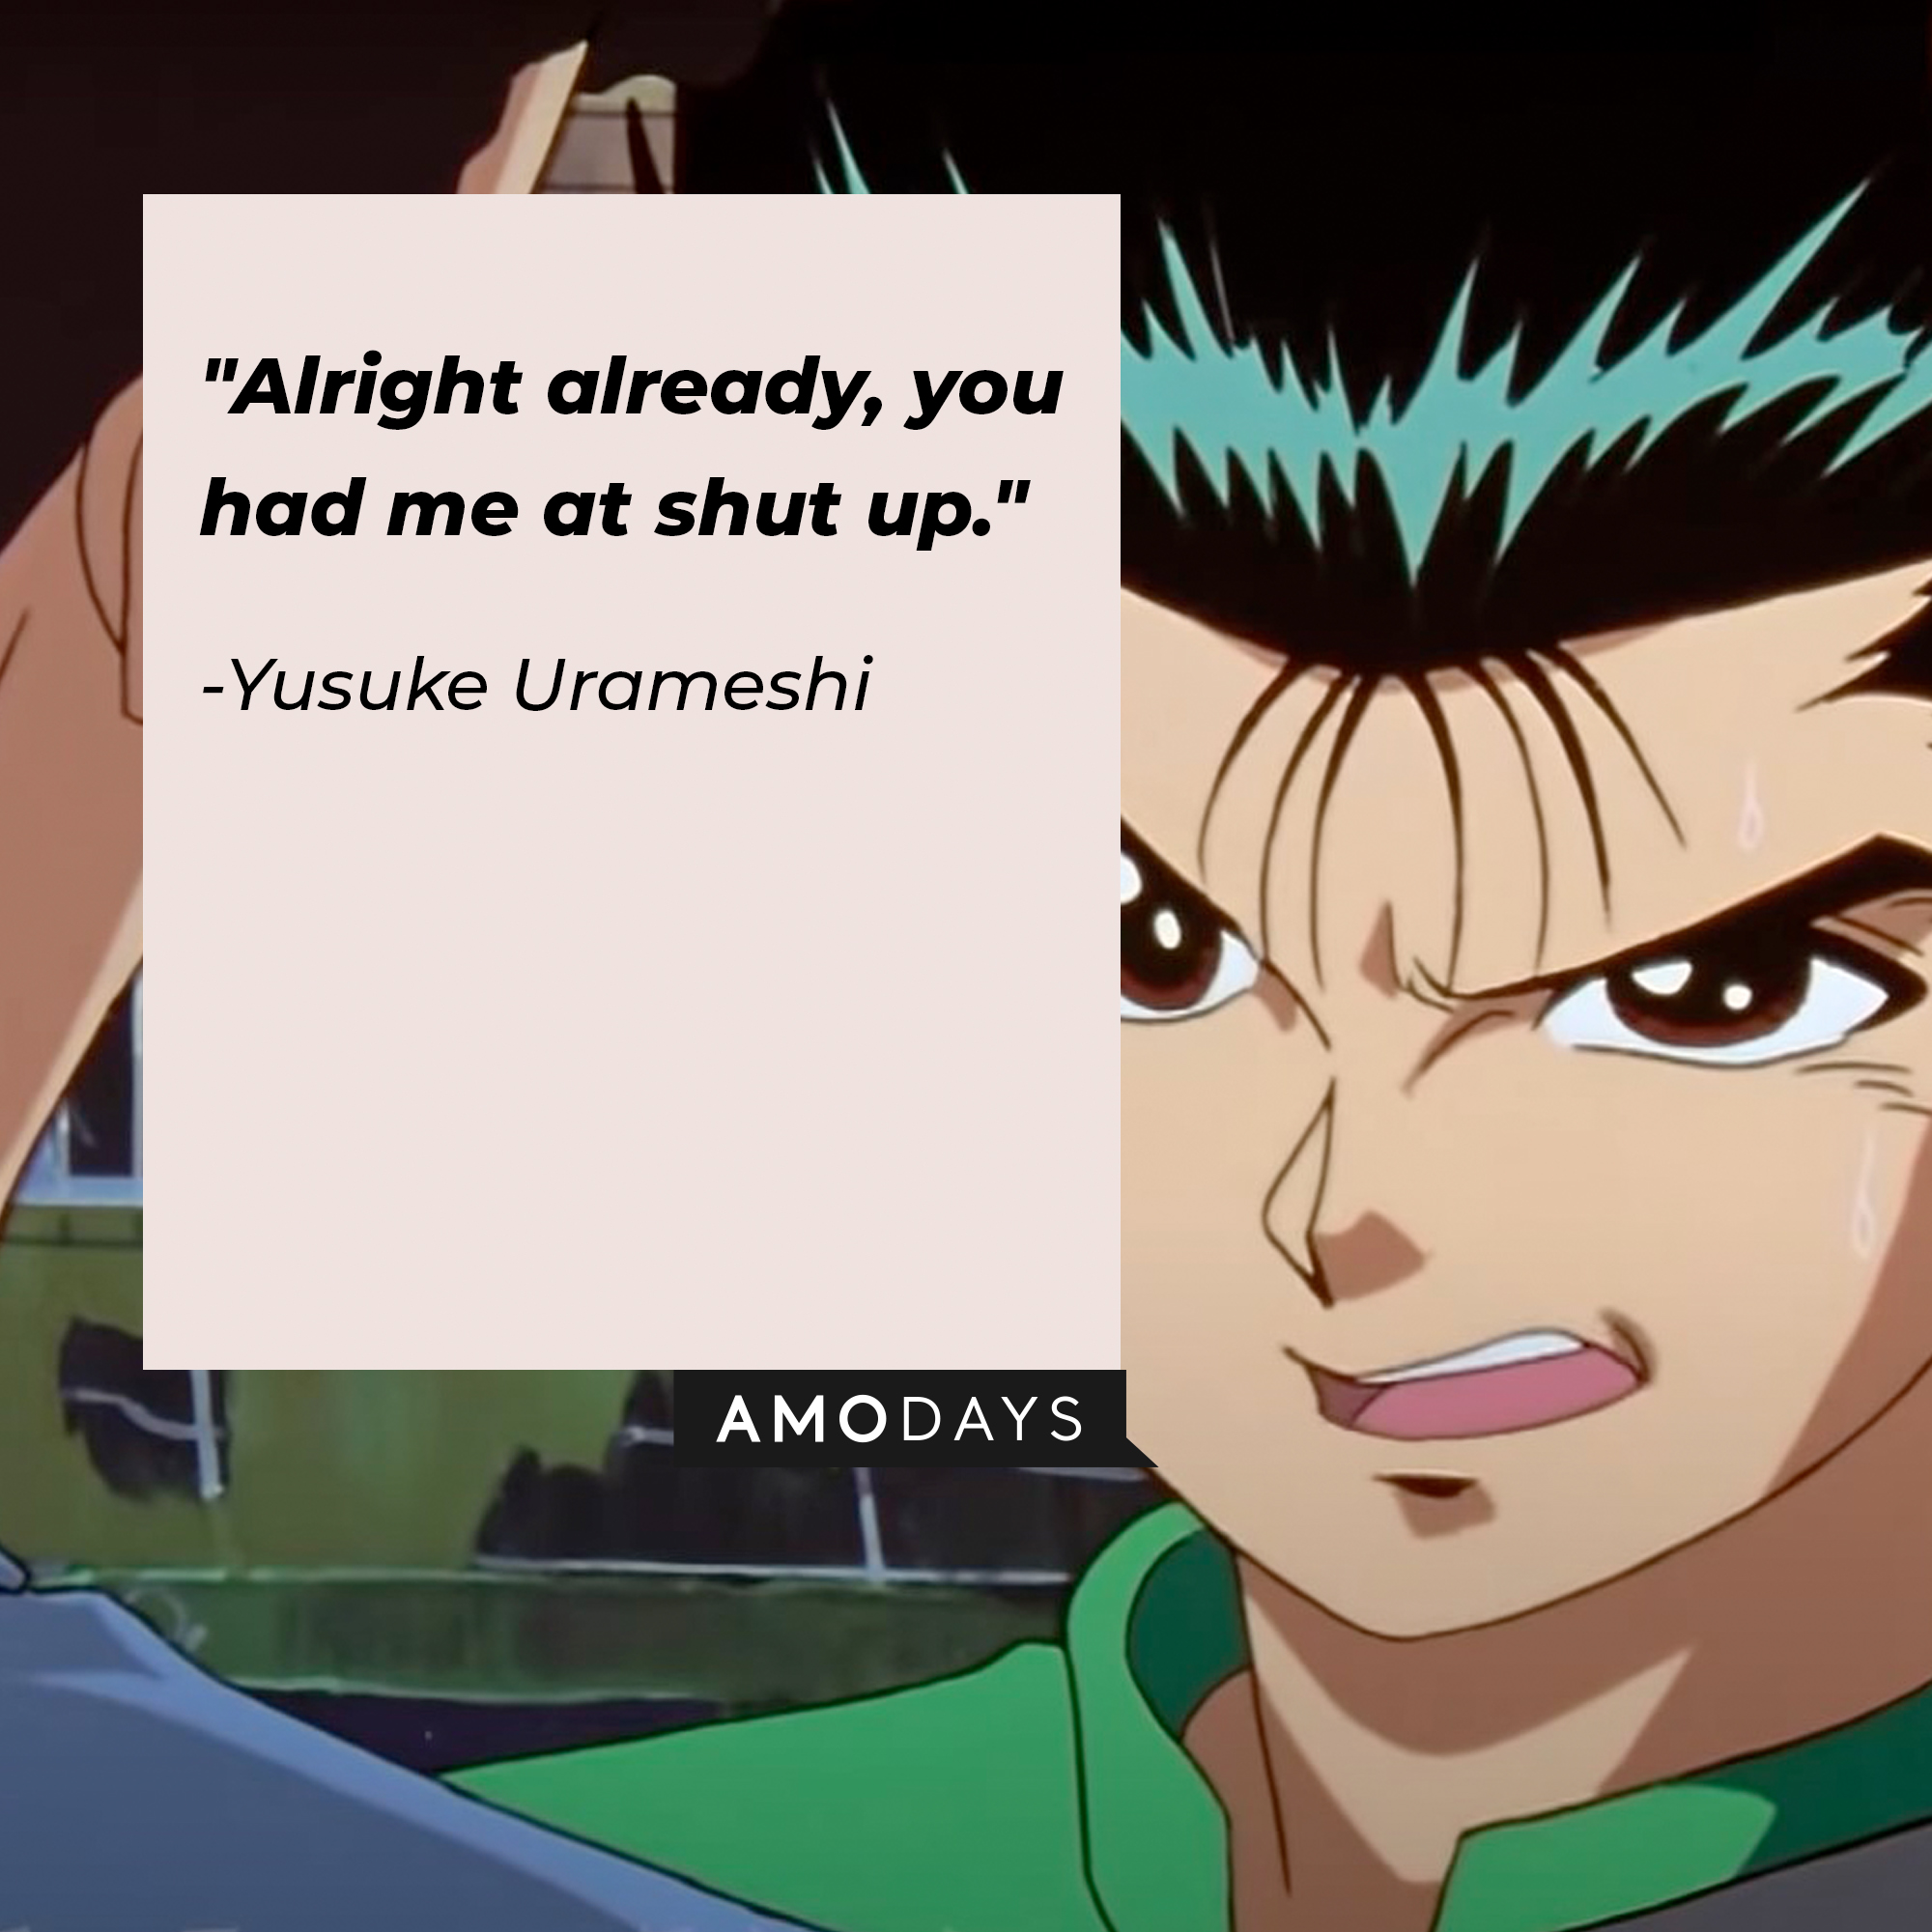 Yusuke Urameshi's quote: "Alright already, you had me at shut up." | Source: Facebook.com/watchyuyuhakusho